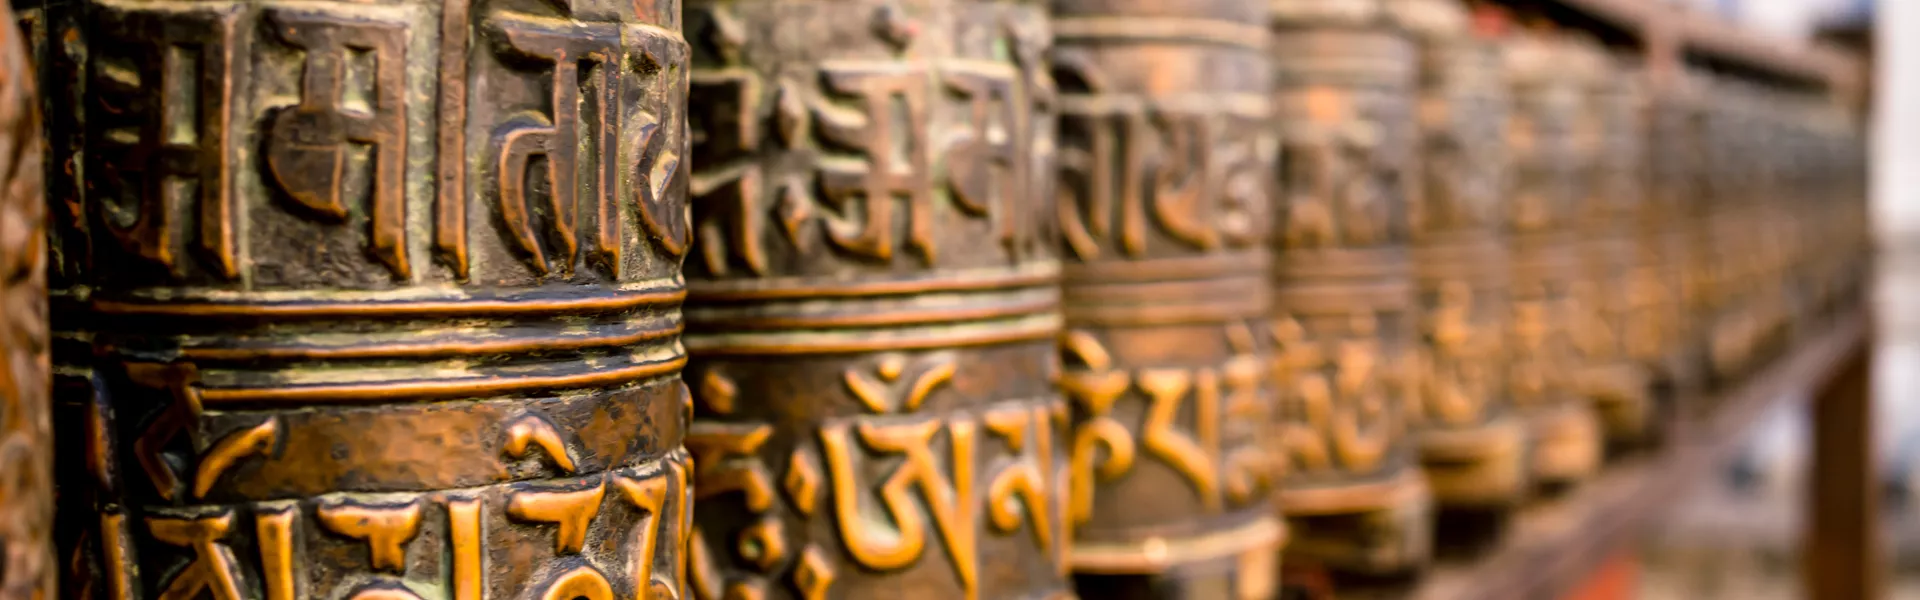 Prayer wheels in Nepal